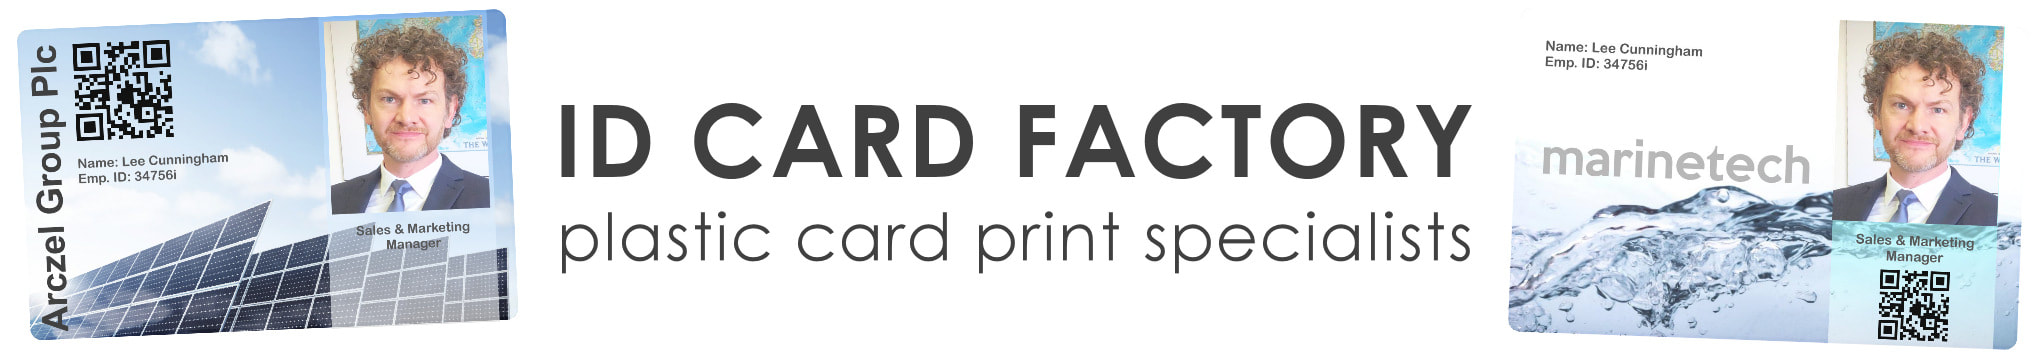 Chesterfield ID card printing | staff photo ID cards | company employee ID card print service | Local Identity Card Printing | Custom Design 